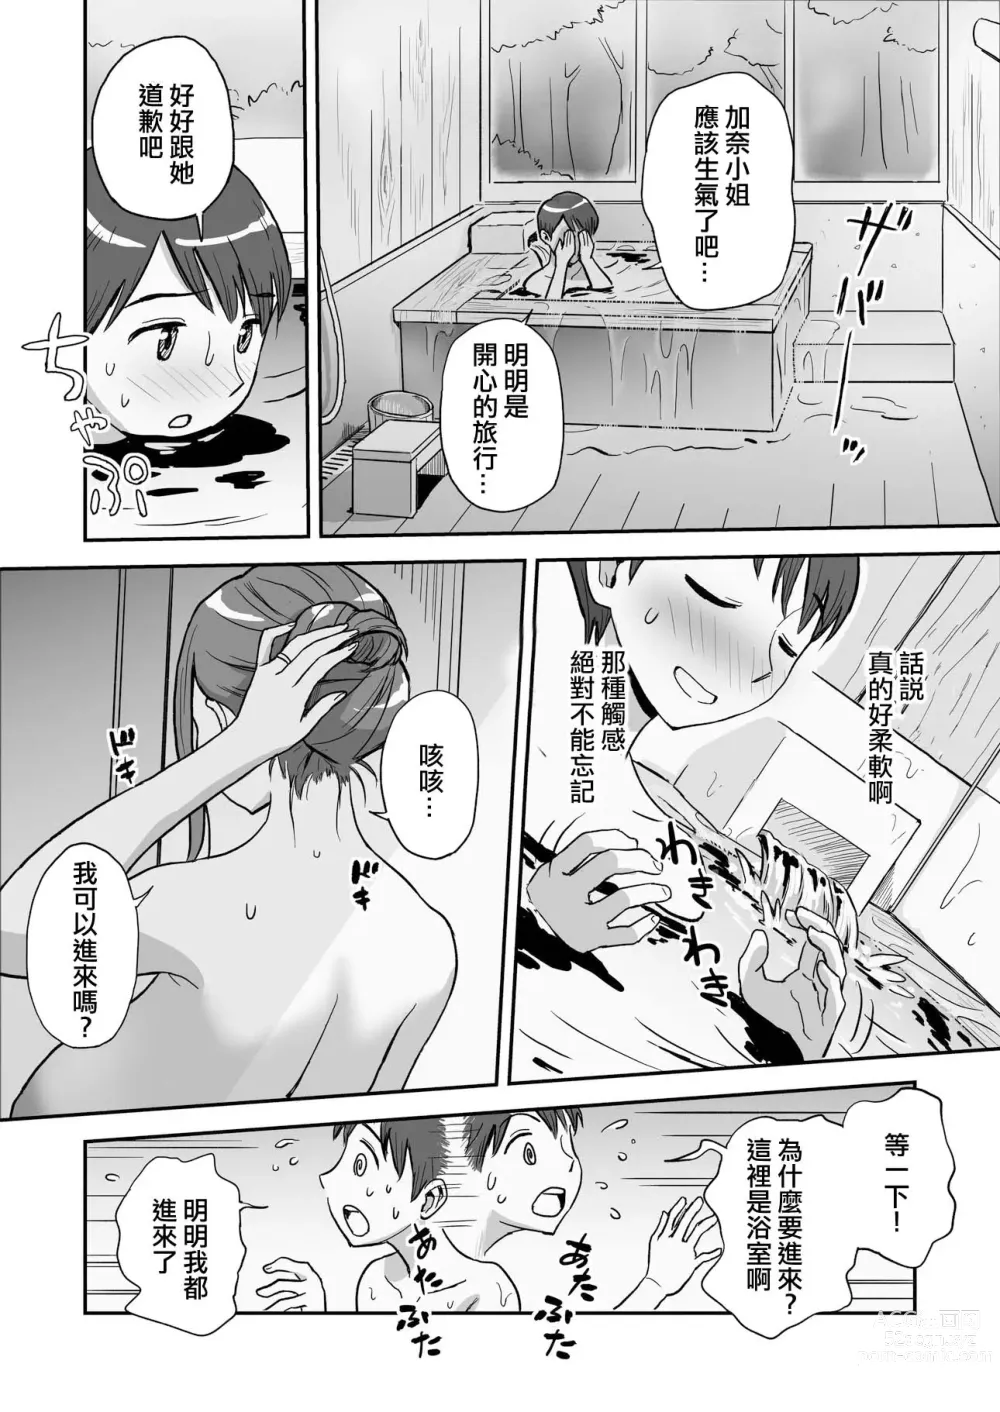 Page 15 of doujinshi 僅此一天的媽媽 這是隻屬於我們...兩人的秘密...哦?....